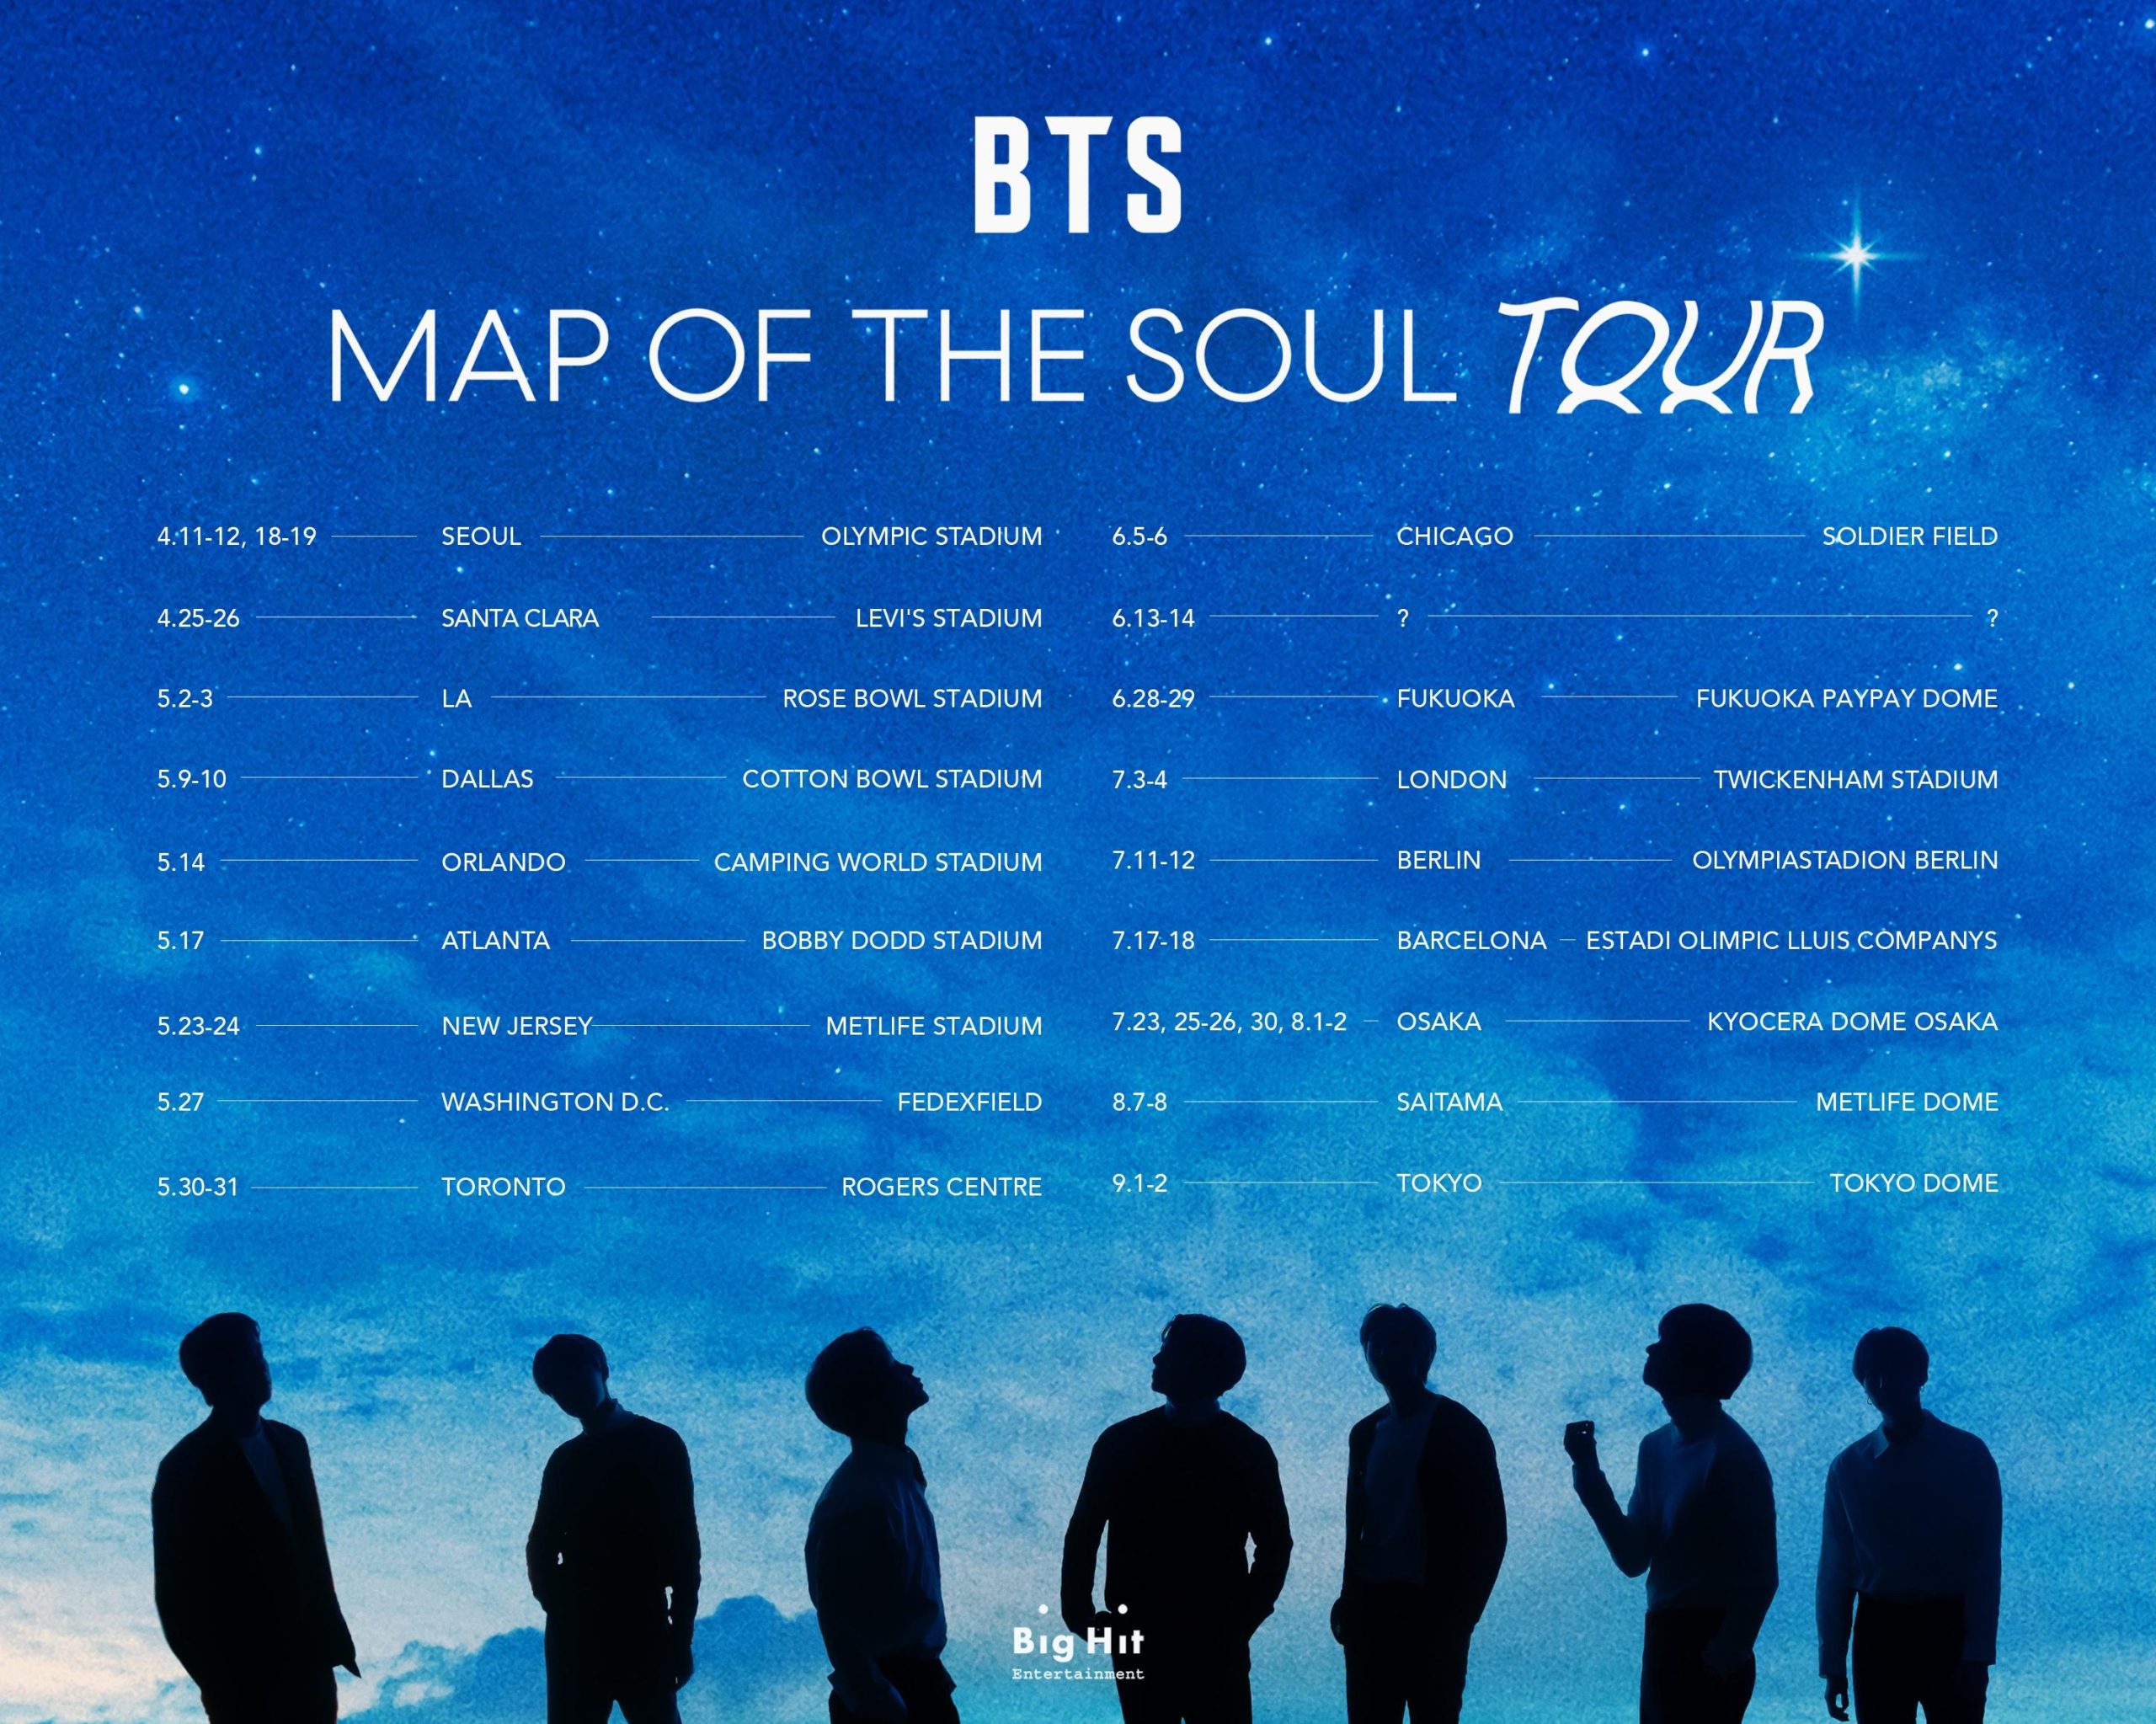 BTSワールドツアー「BTS MAP OF THE SOUL TOUR」開催決定 | PODA